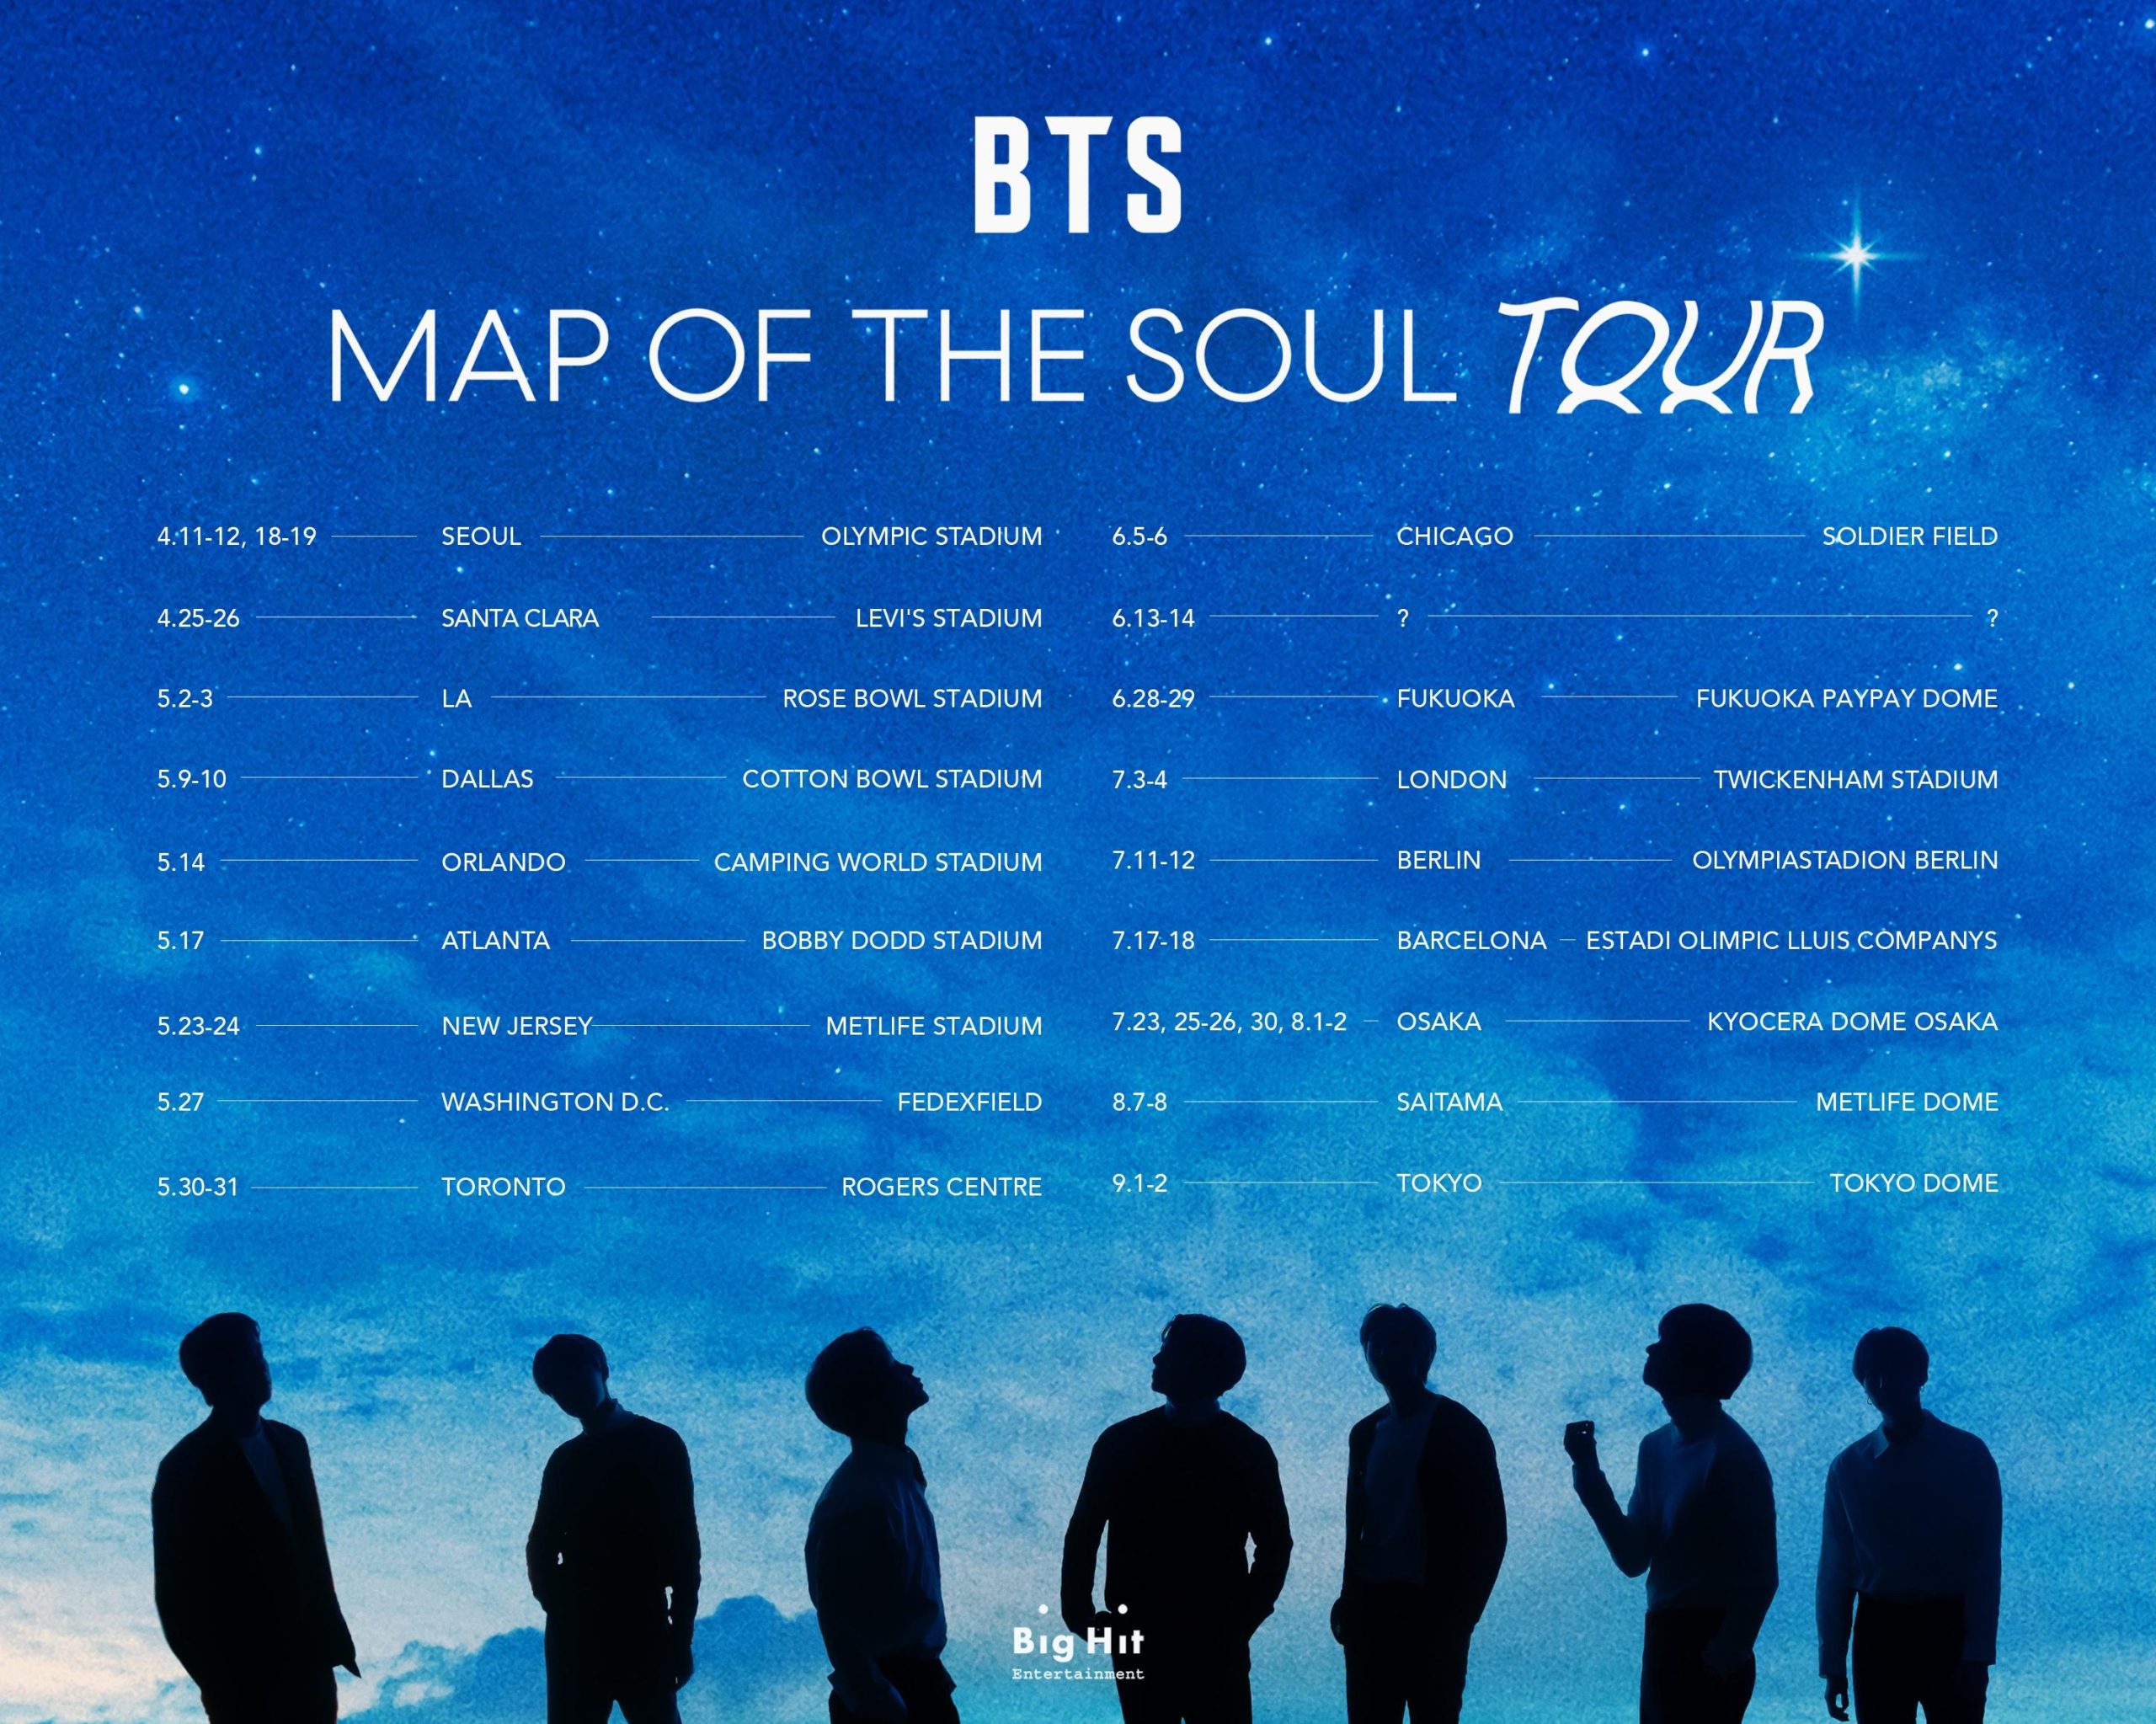 BTSワールドツアー「BTS MAP OF THE SOUL TOUR」開催決定 | PODA